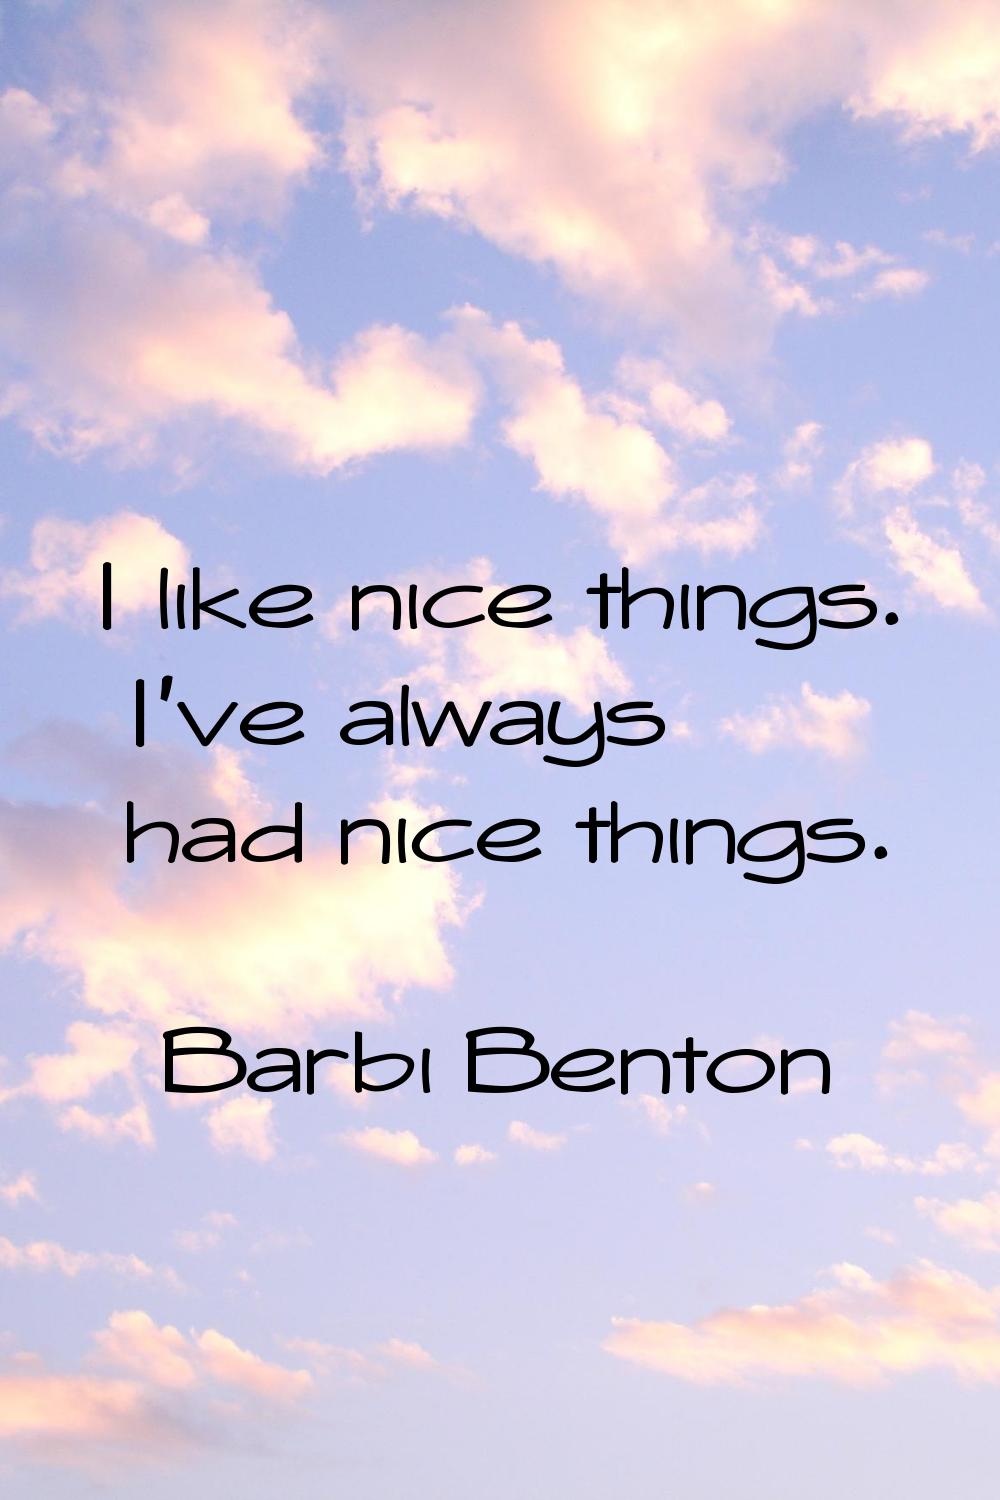 I like nice things. I've always had nice things.